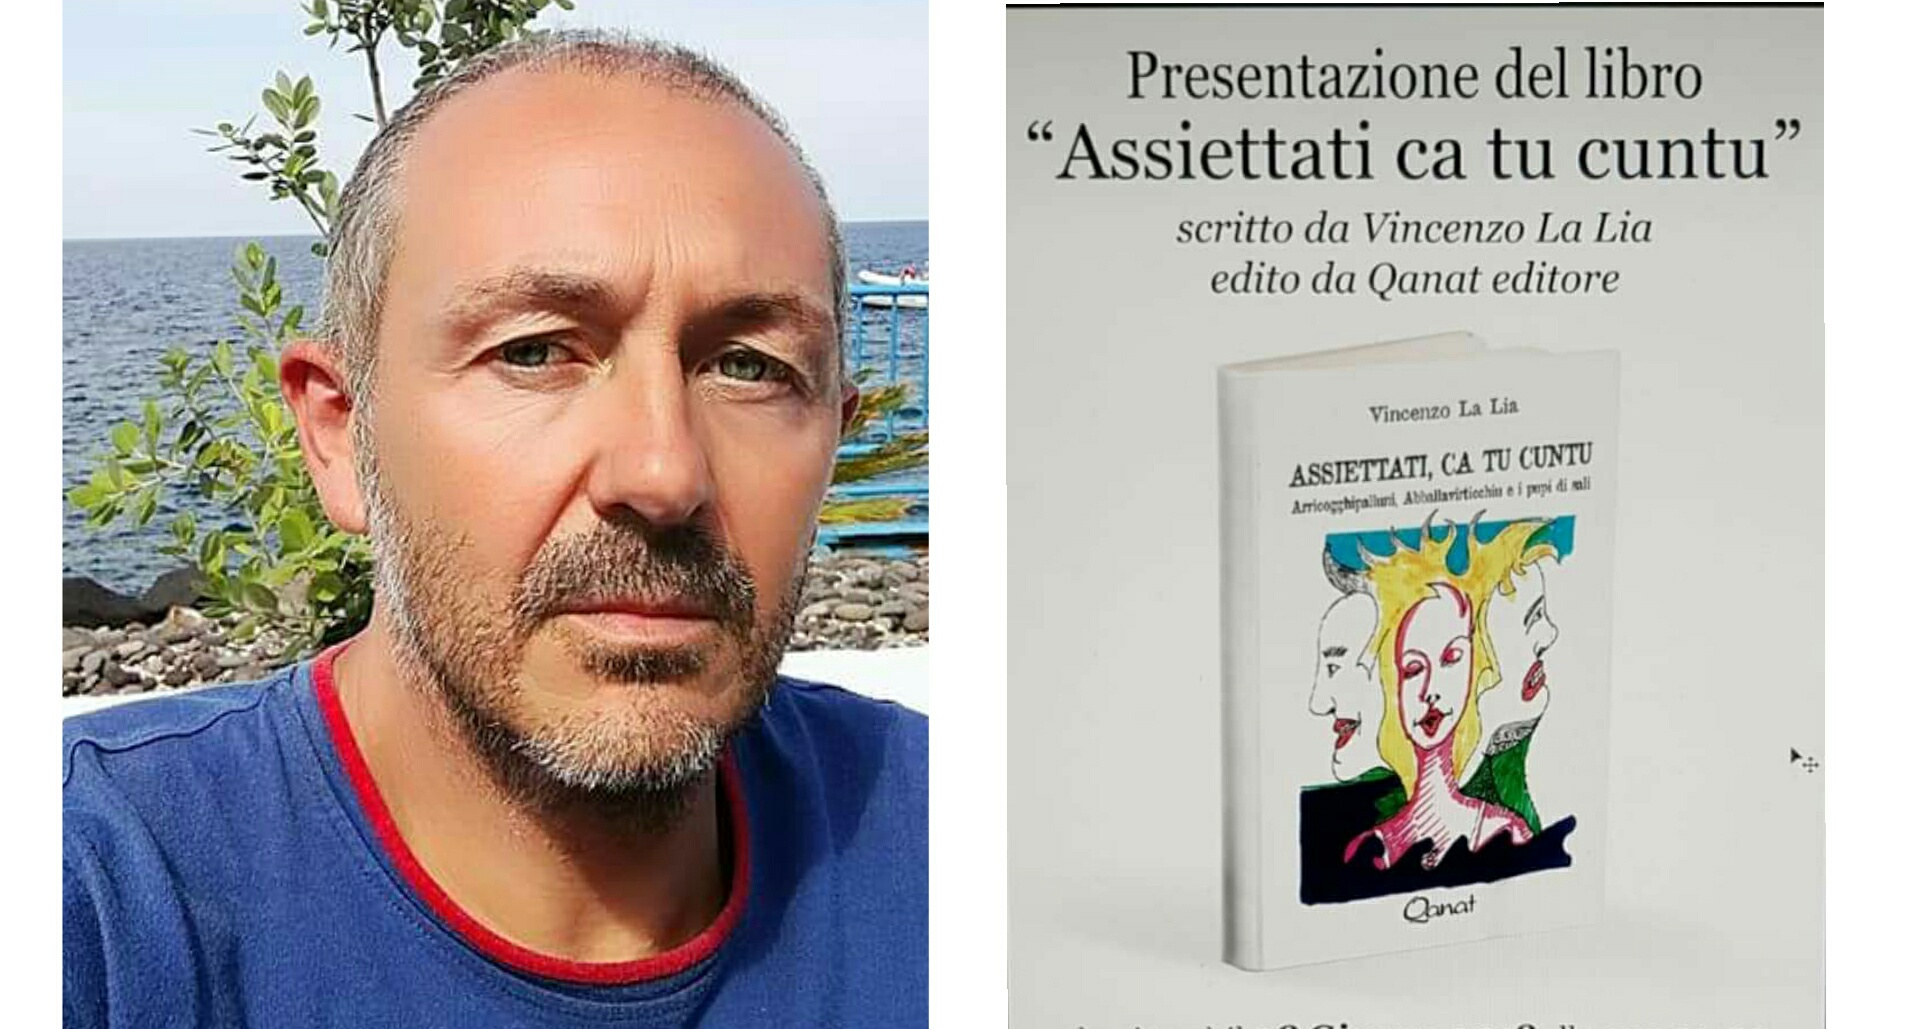 “Assiettati ca tu Cuntu” il libro di Vincenzo La Lia